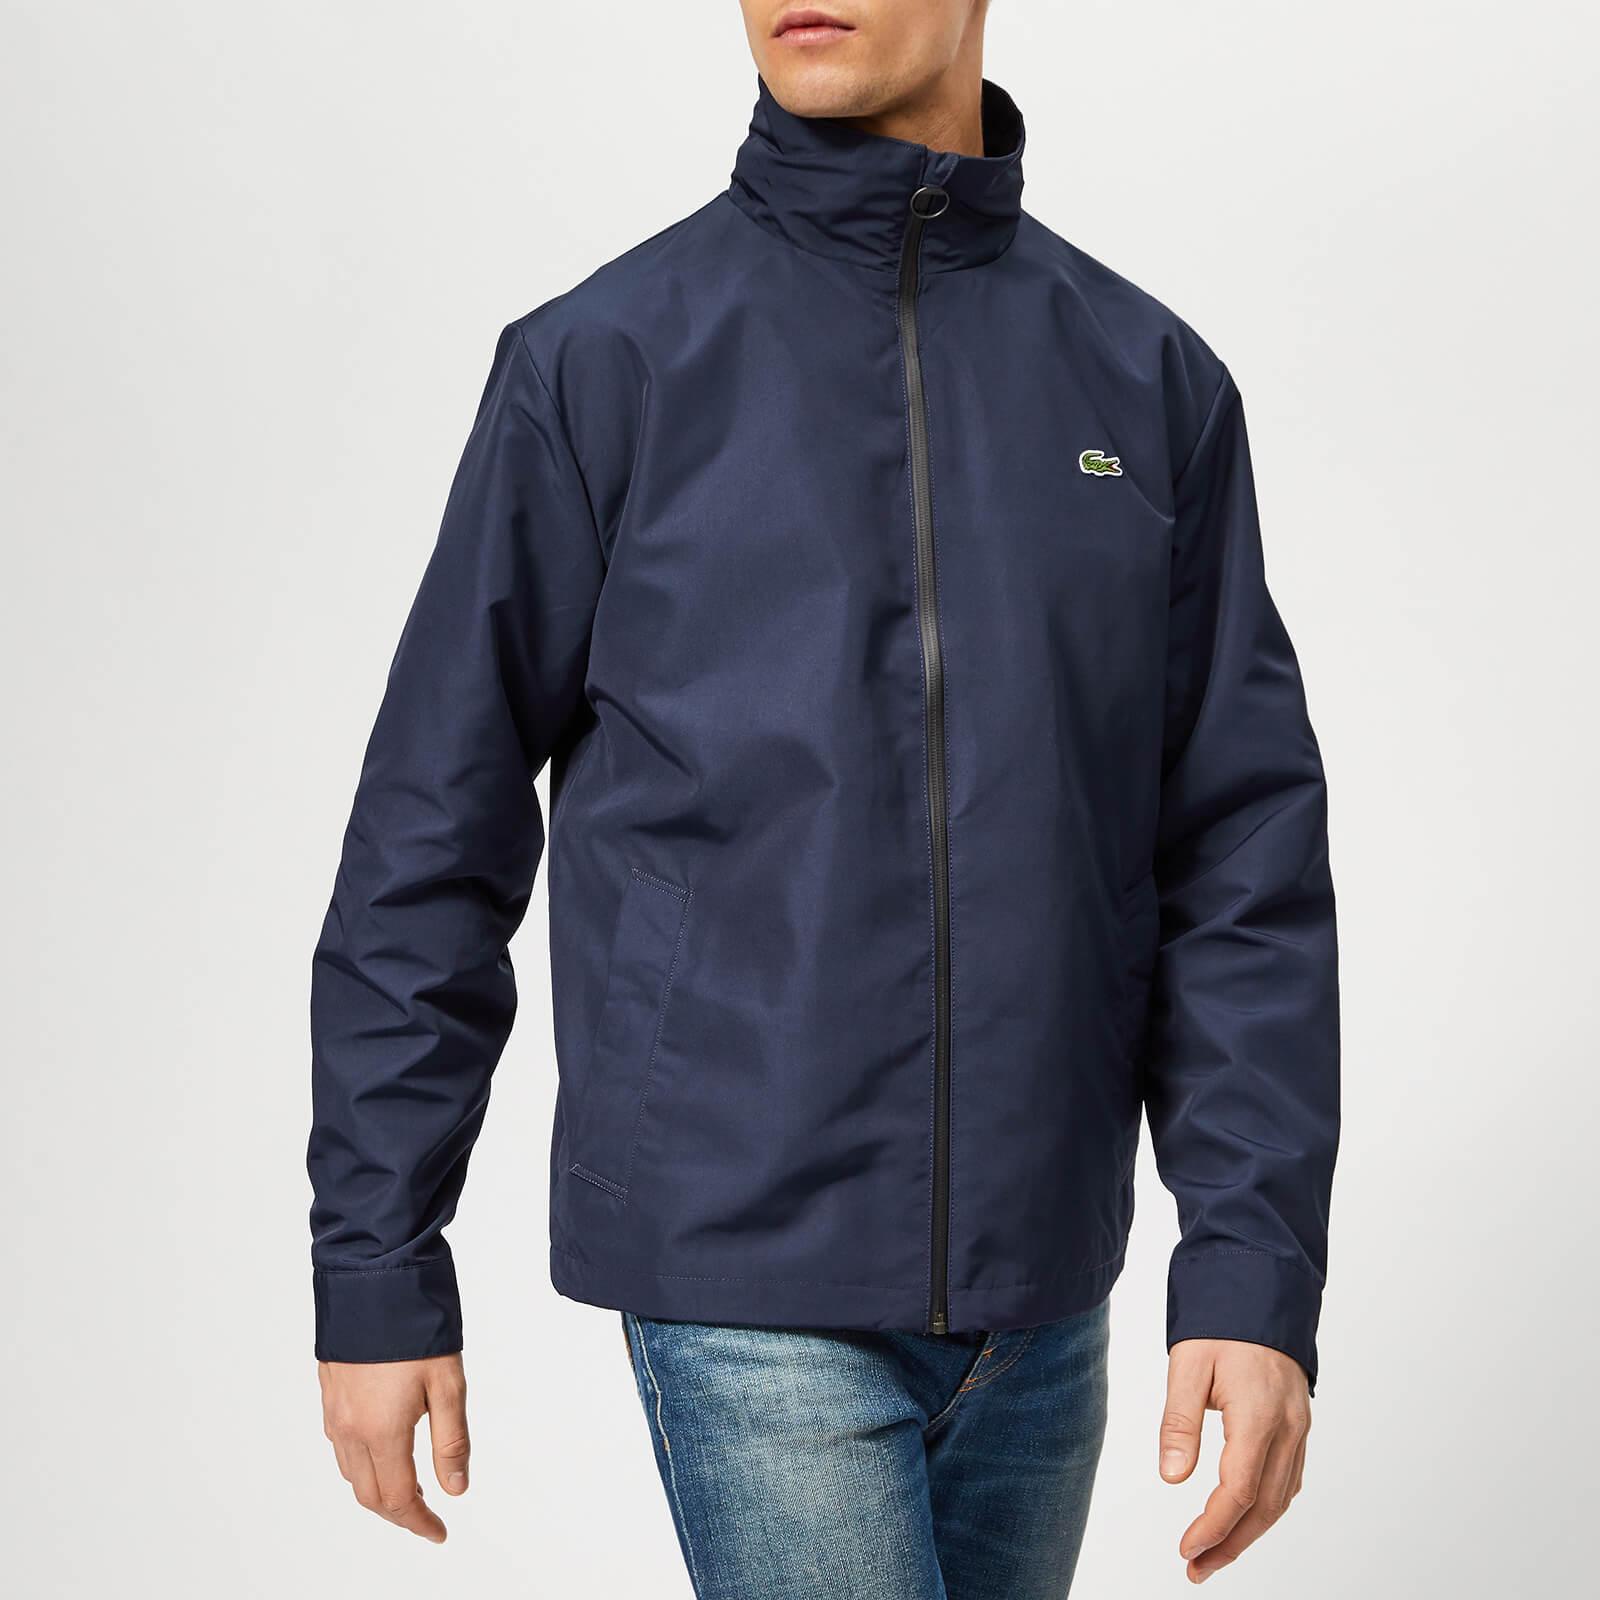 Lacoste Synthetic Classic Blouson Jacket in Blue for Men - Lyst